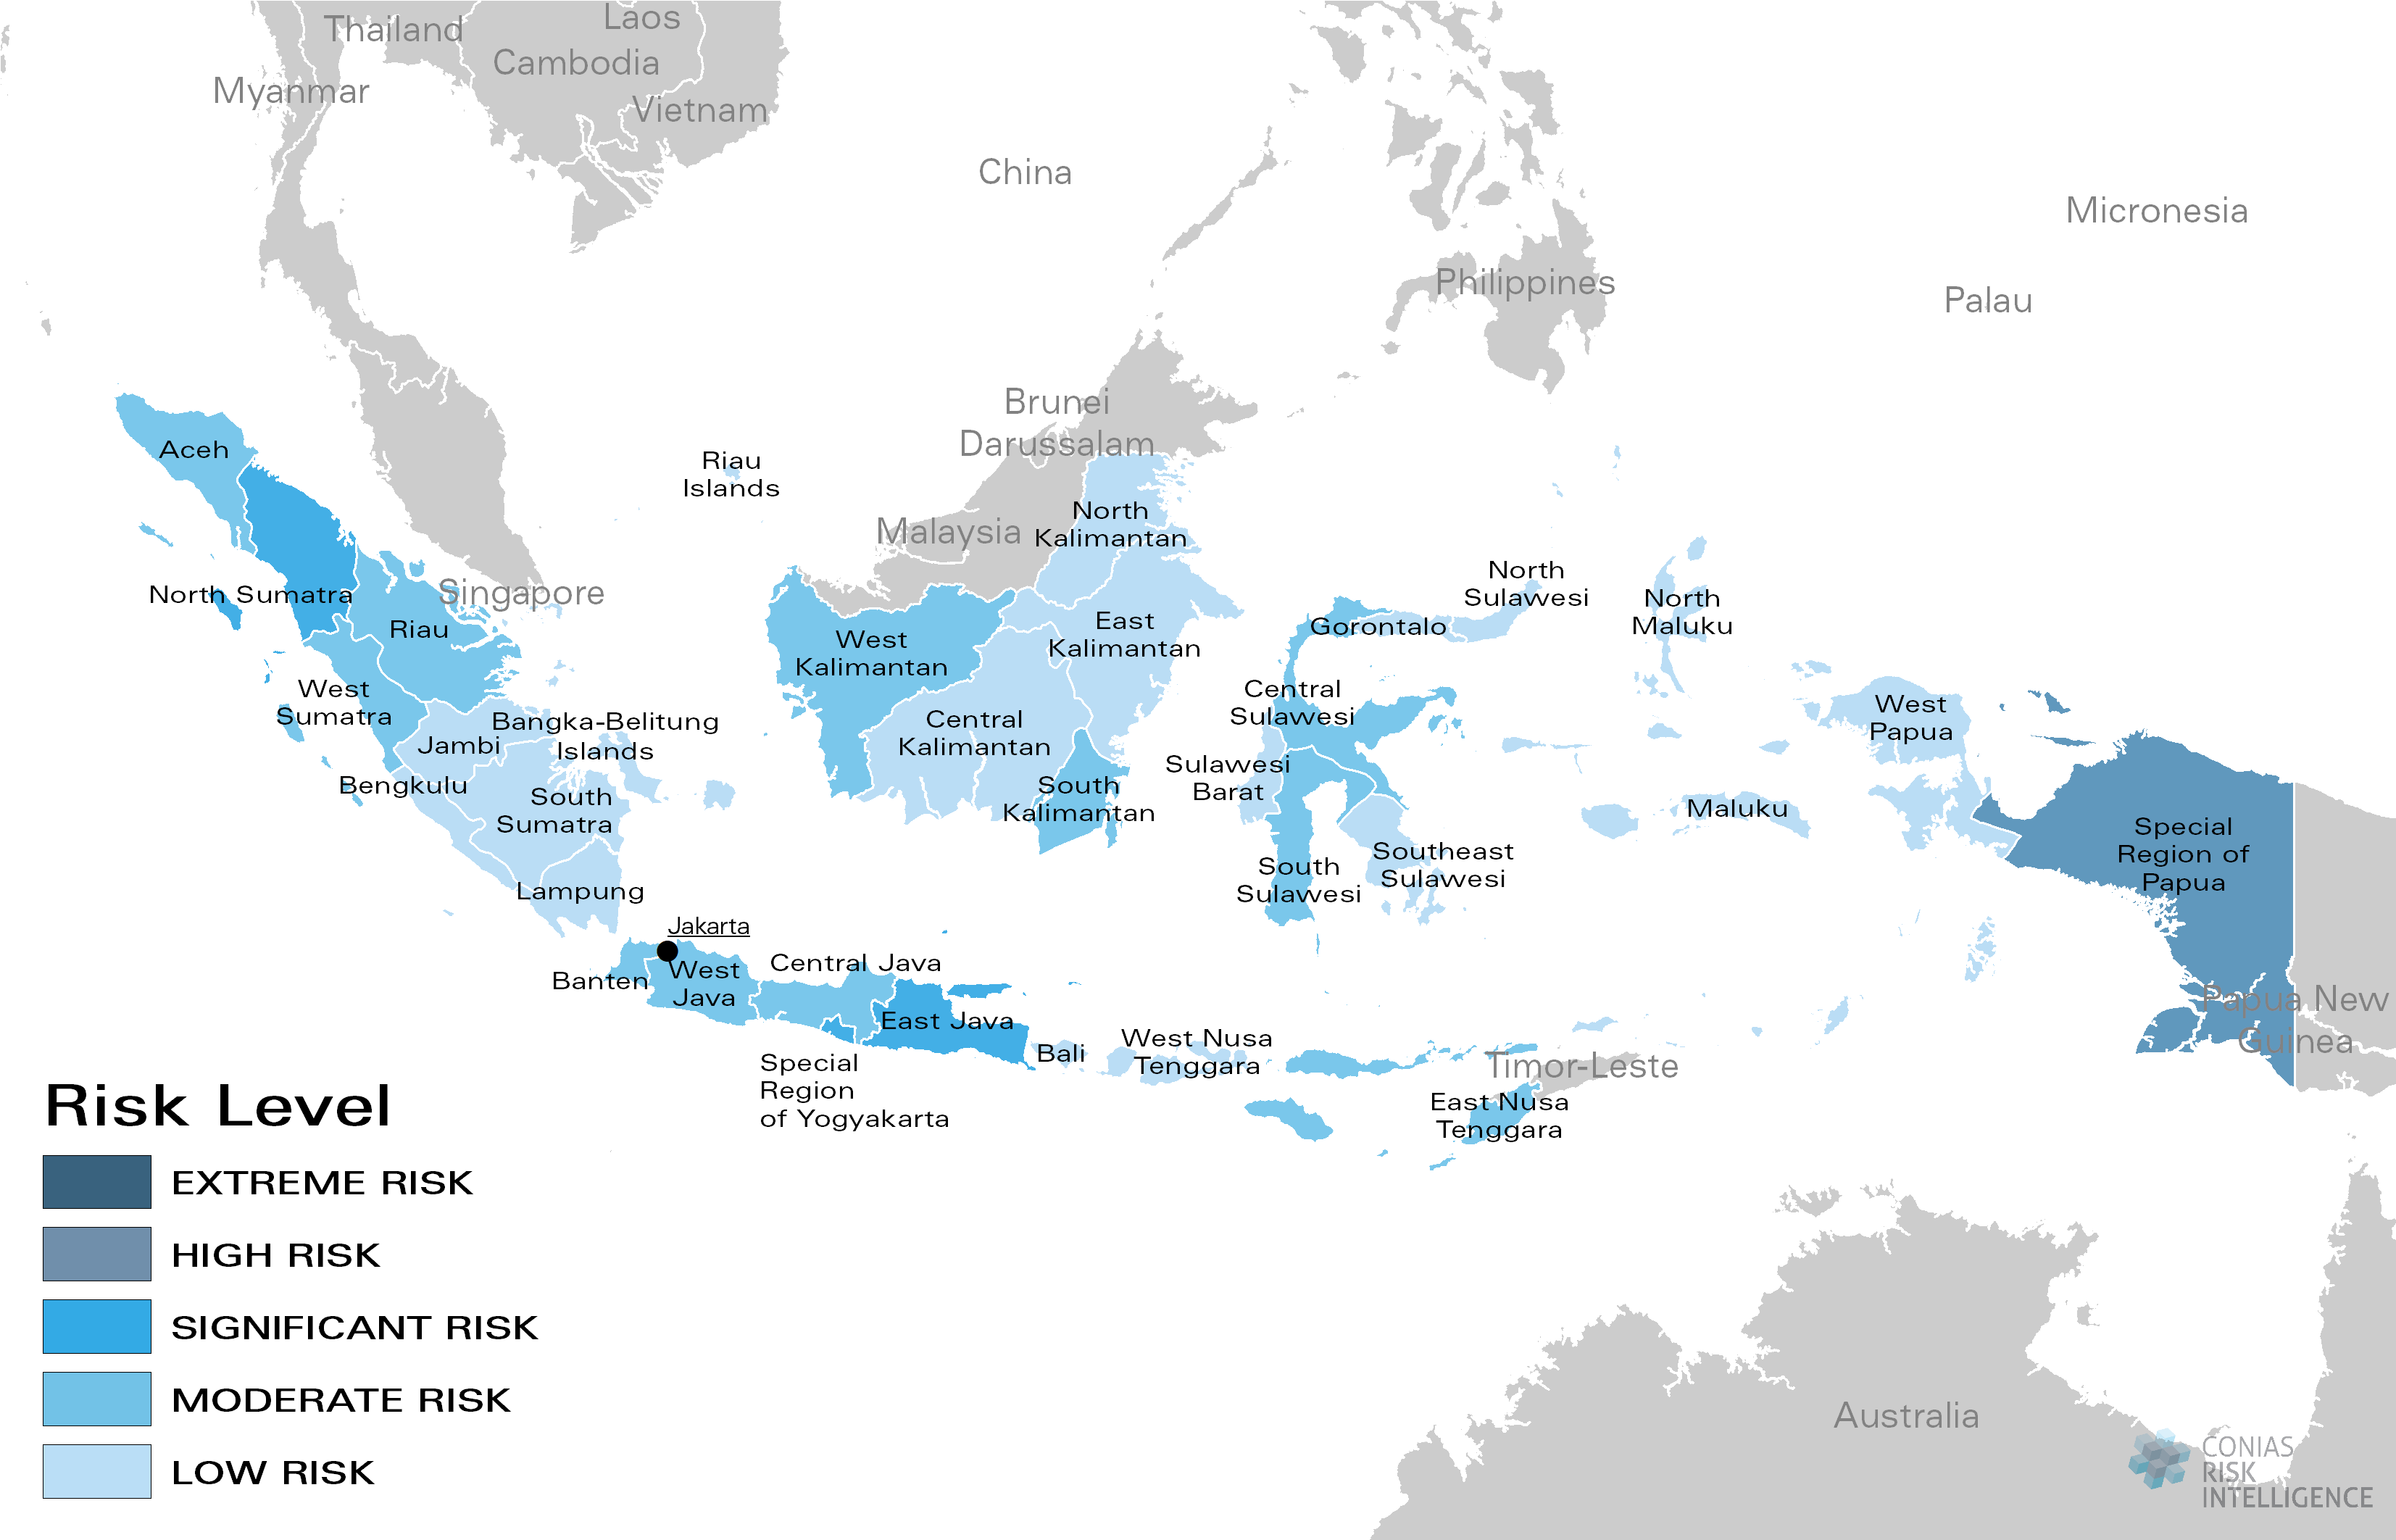 CONIAS Political Risk Maps Indonesien